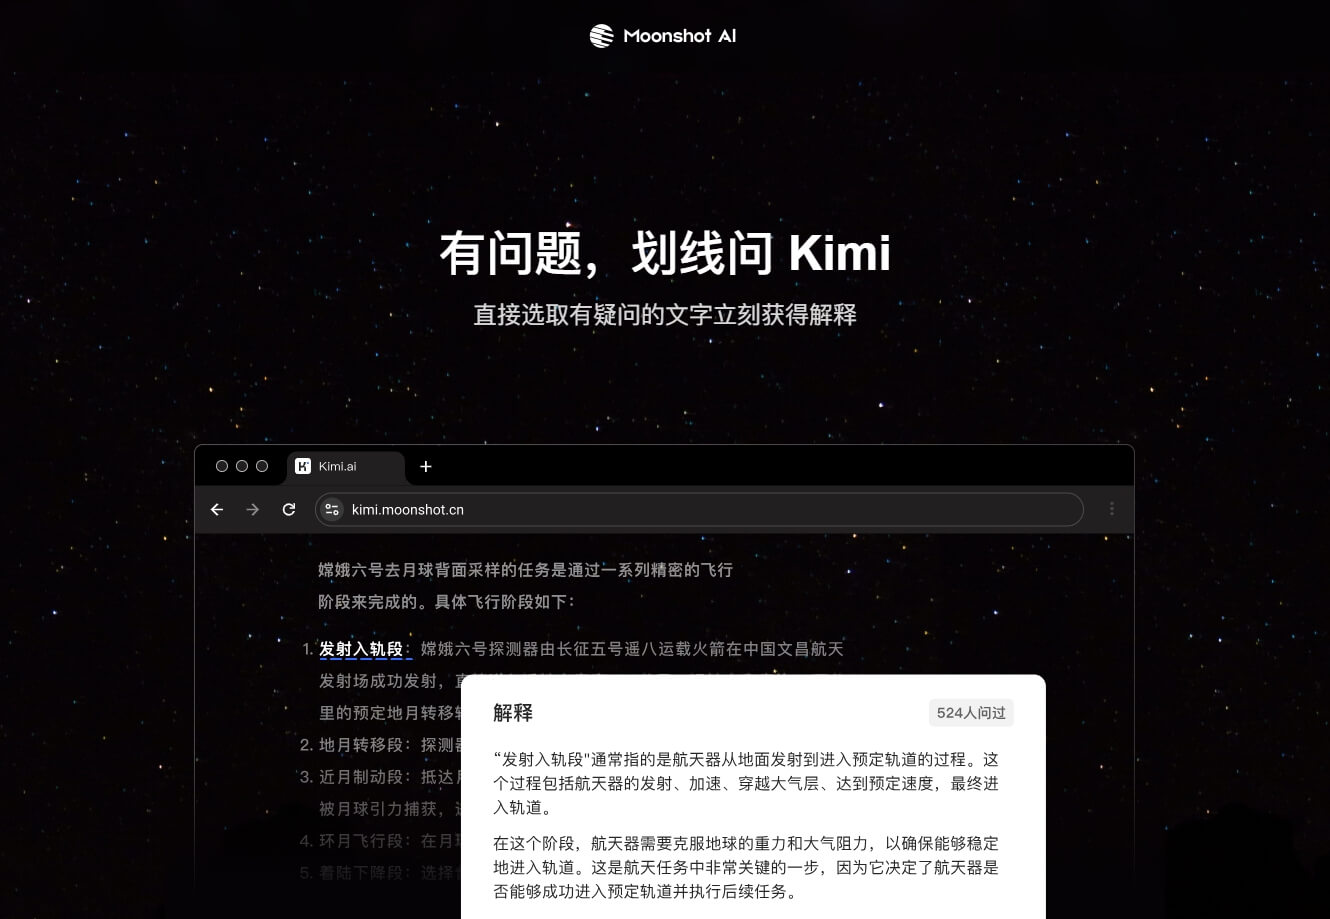 kimi浏览器助手 - 月之暗面推出的智能浏览器扩展